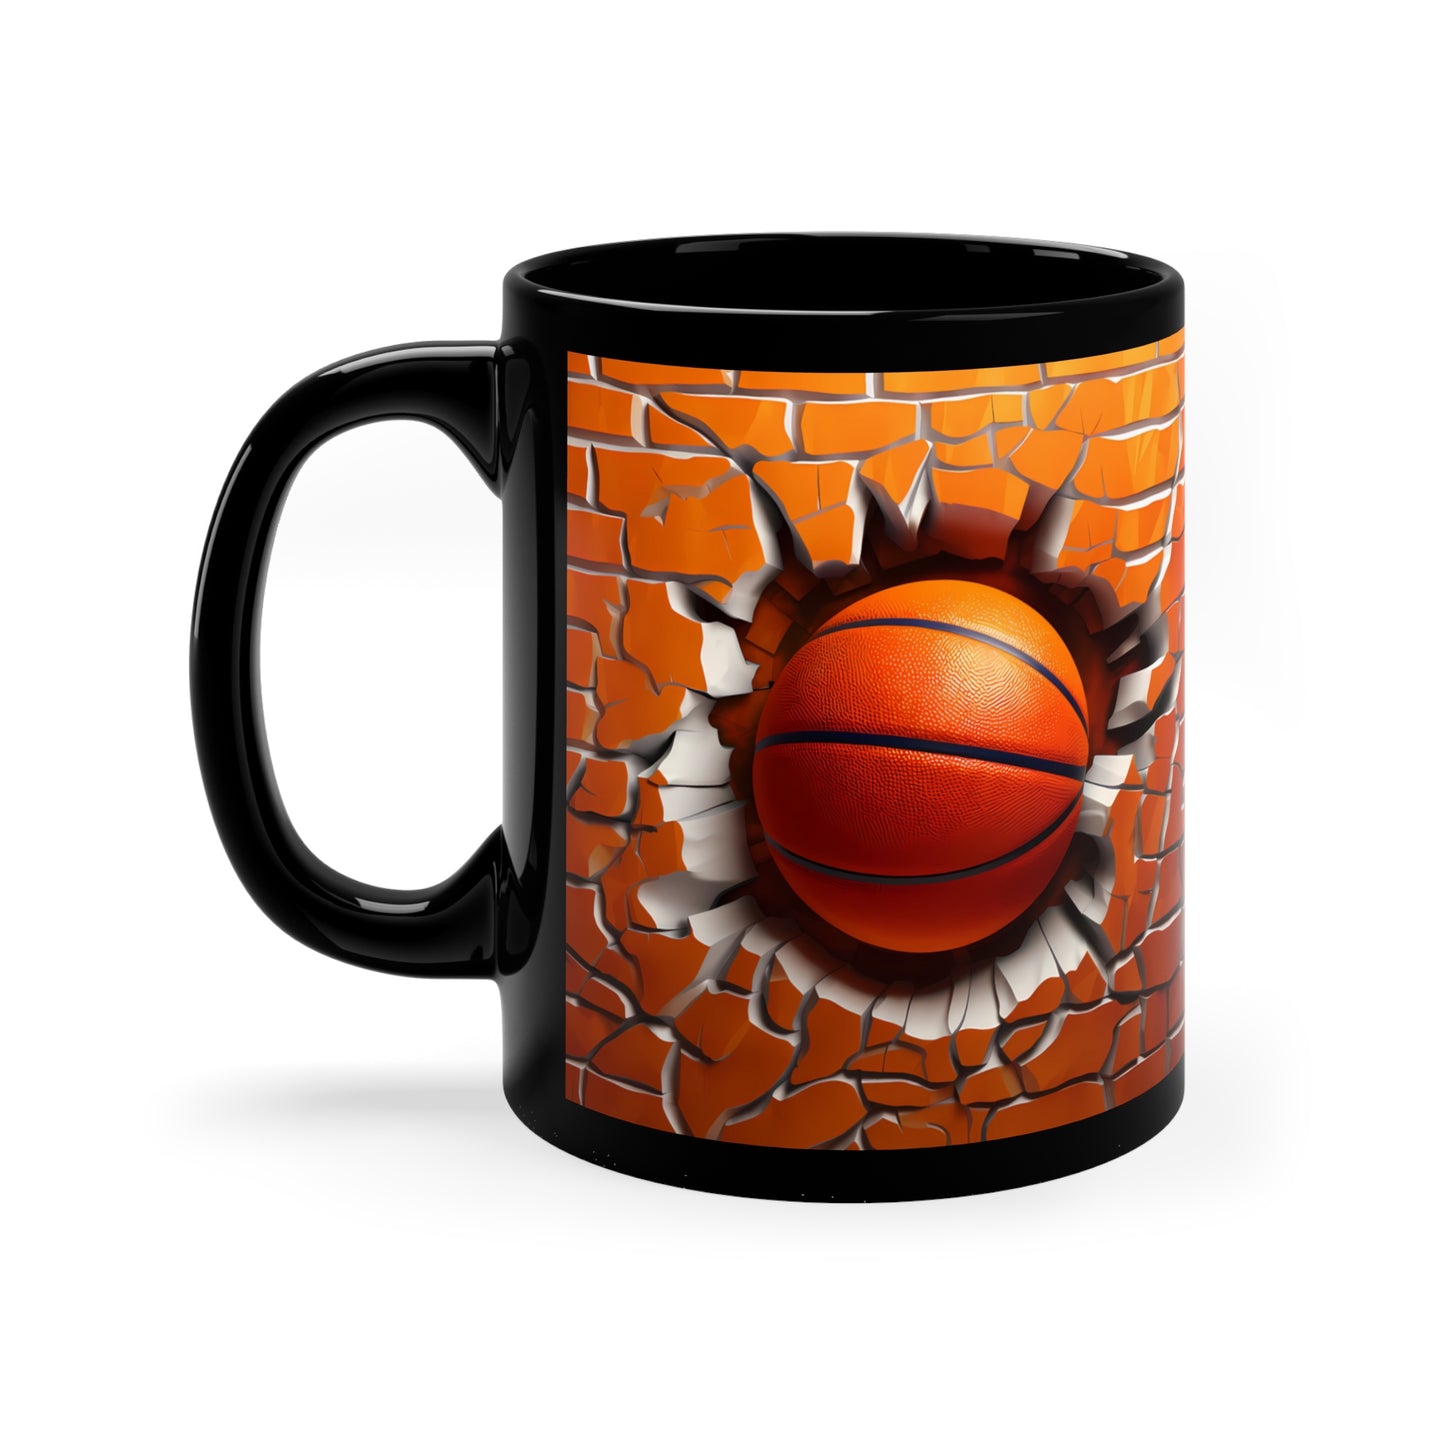 3D BASKETBALL MUG - Basket Fans Mugs - Mugscity - Free